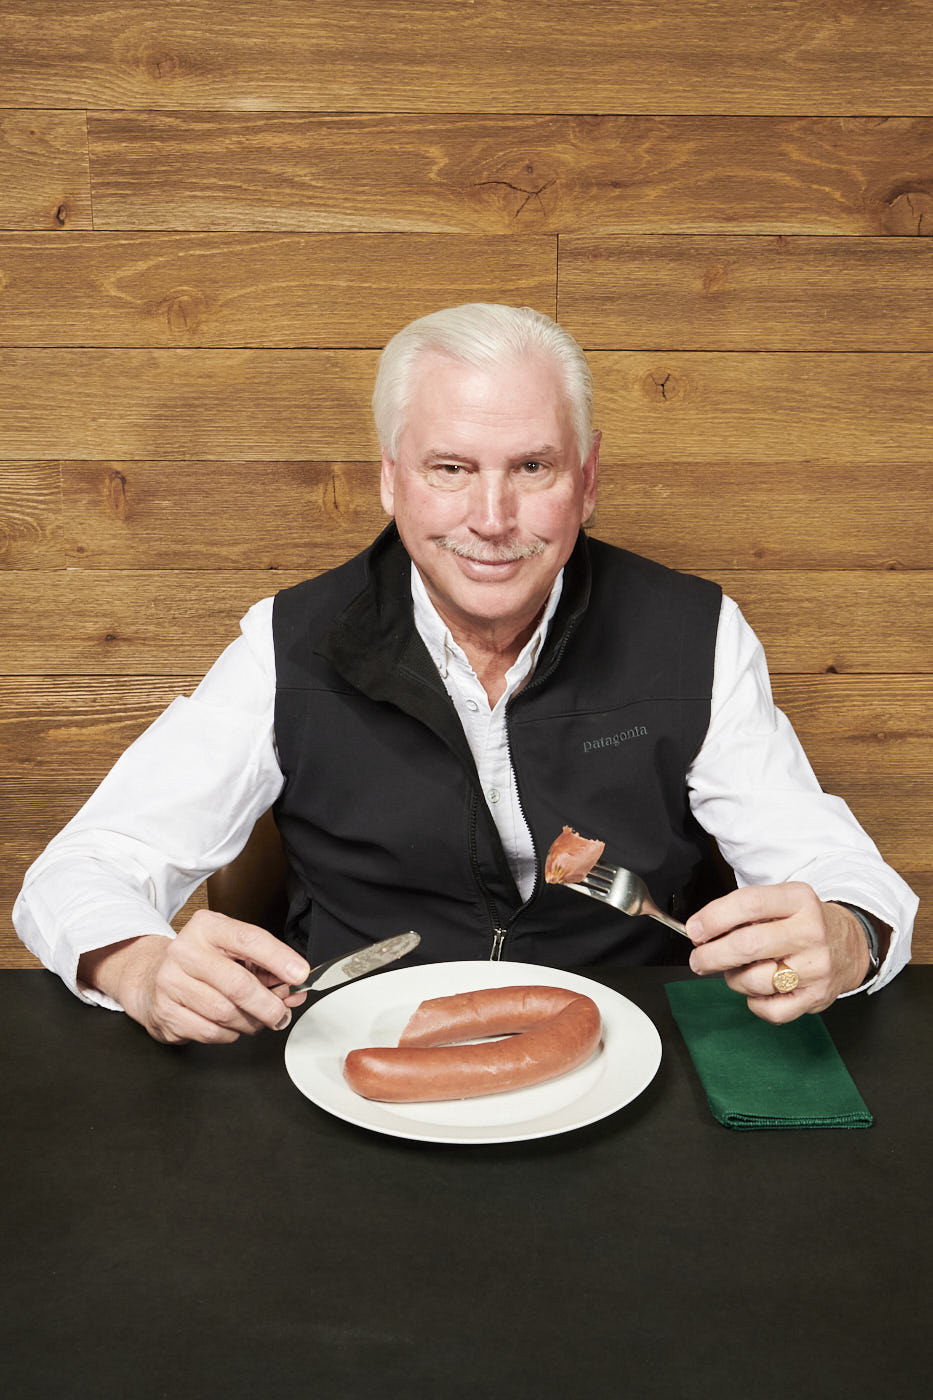 08-man-eating-sausage-portrait